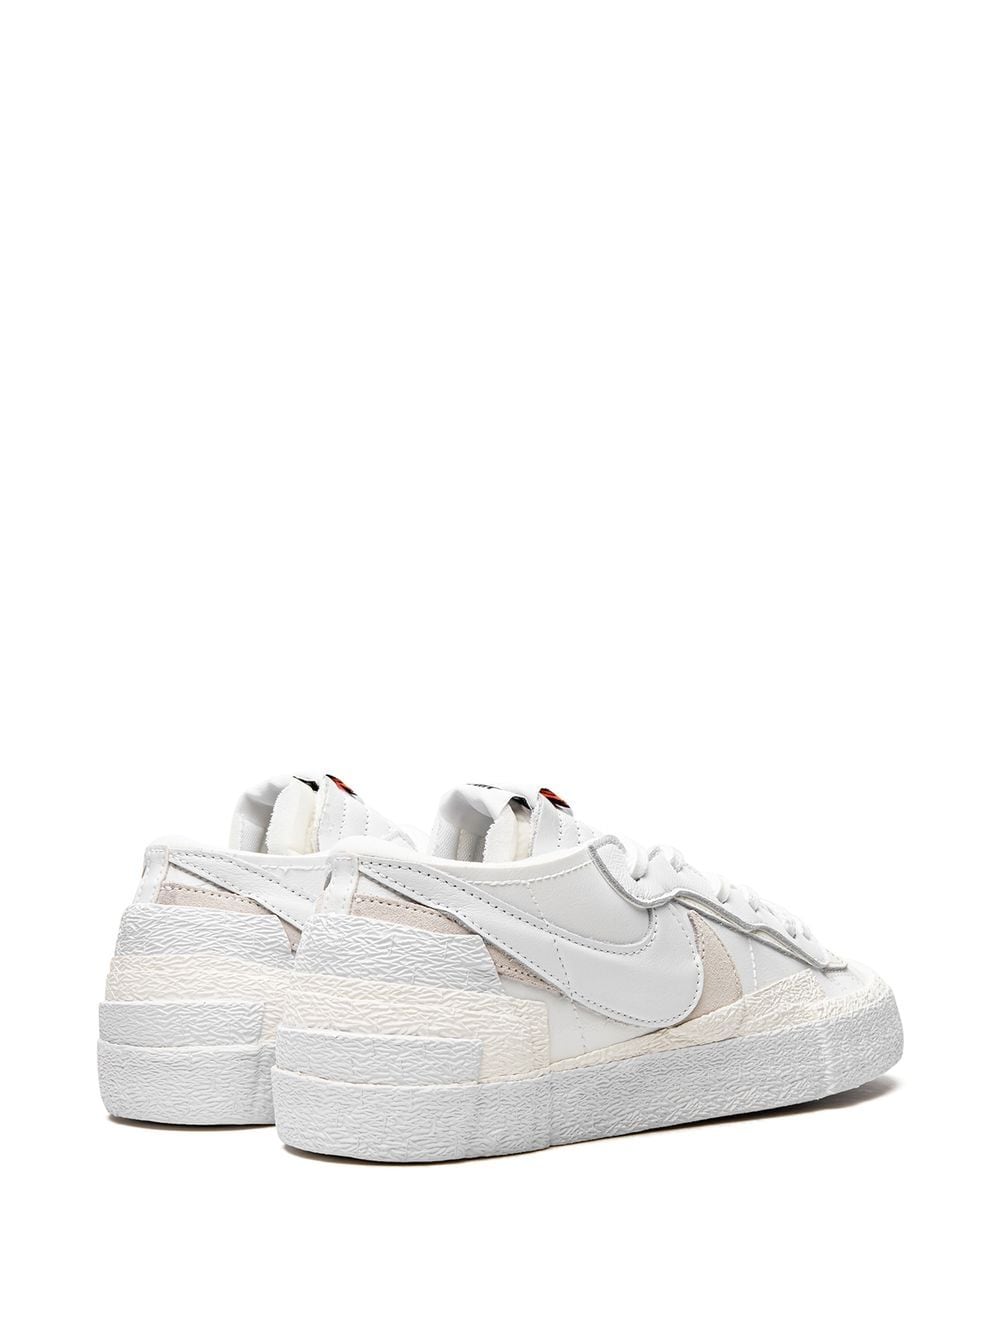 Nike Sacai Blazer Low "White Leather" Sneakers Farfetch